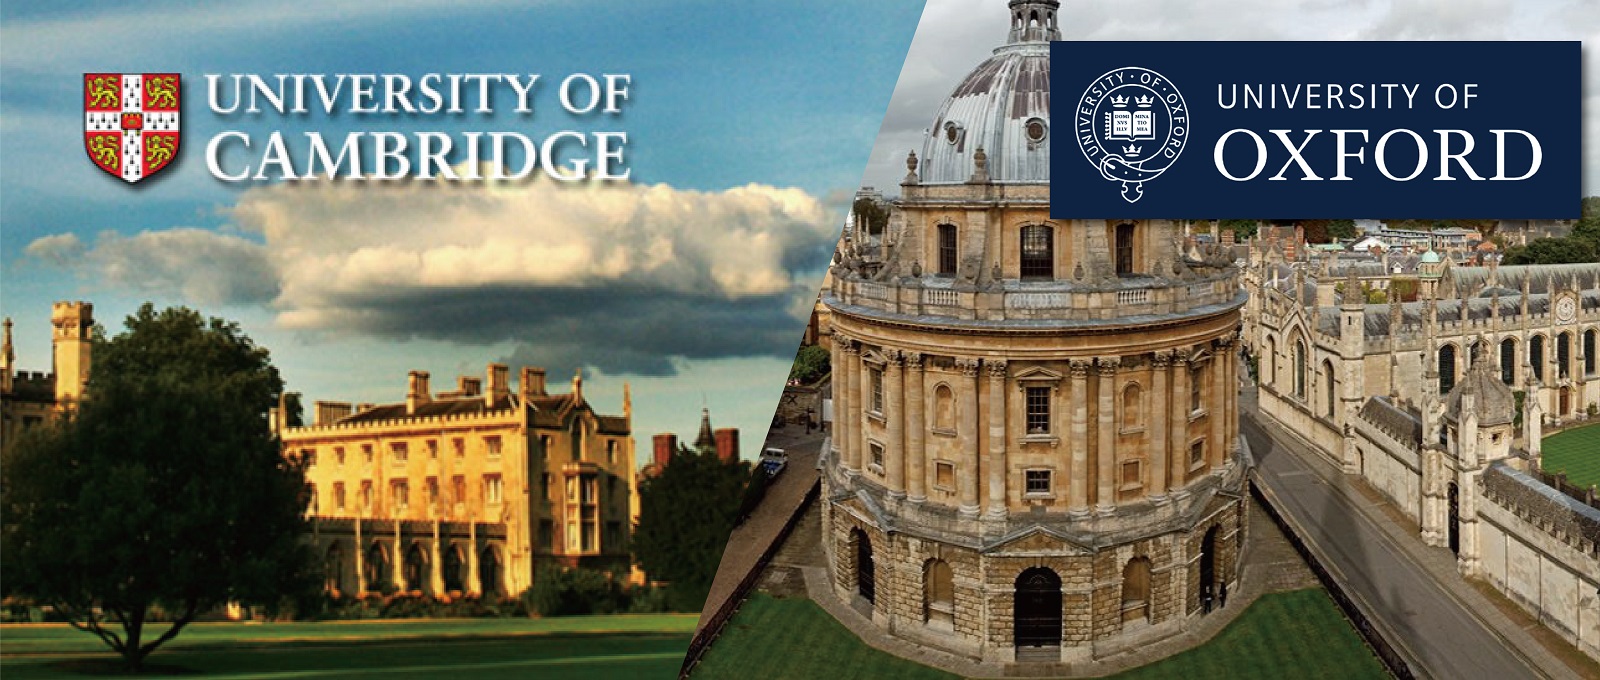 University of Cambridge and Oxford